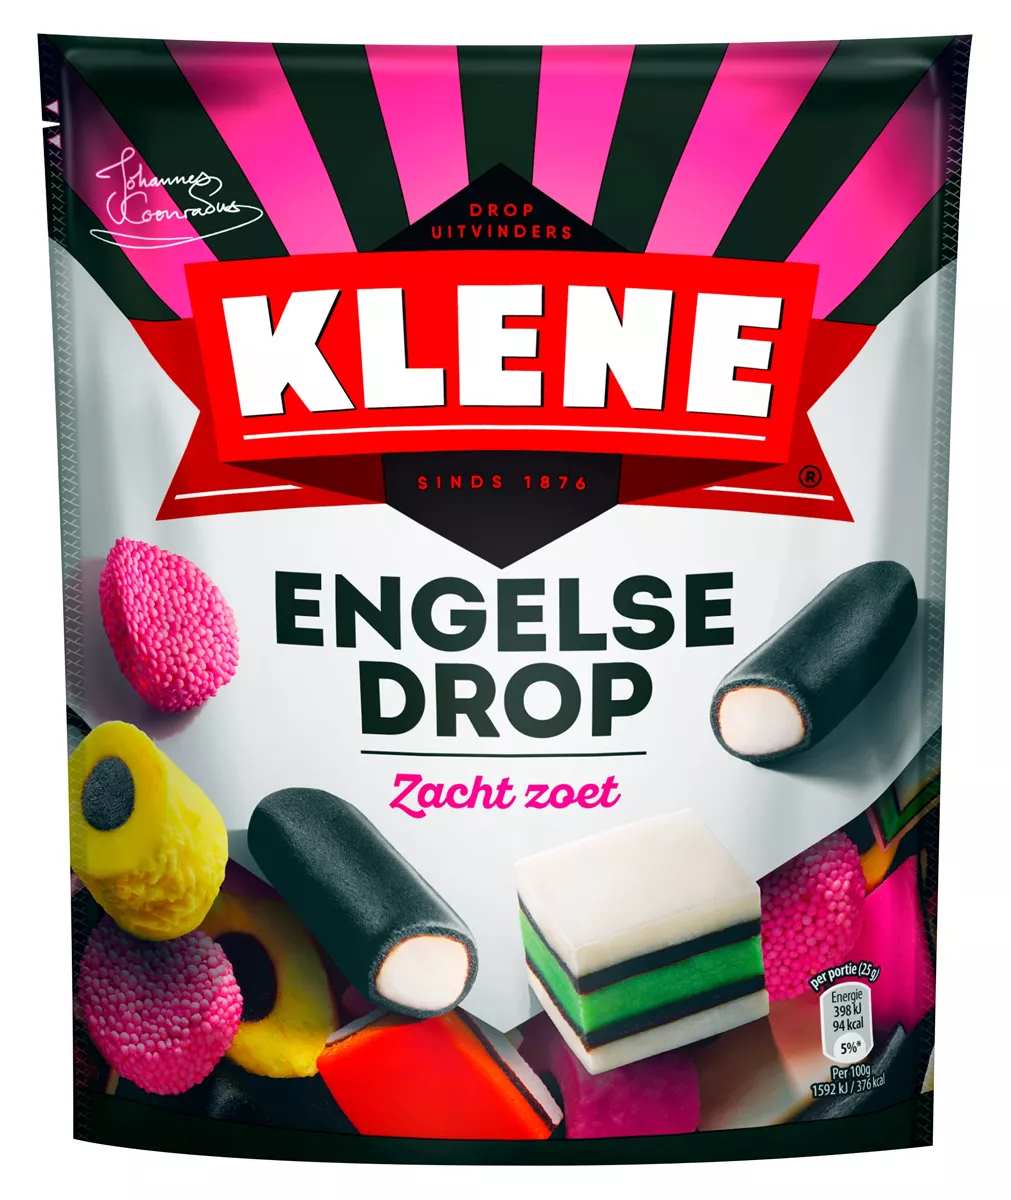 Klene Engelse Drop – Dutch Liquorice Allsorts